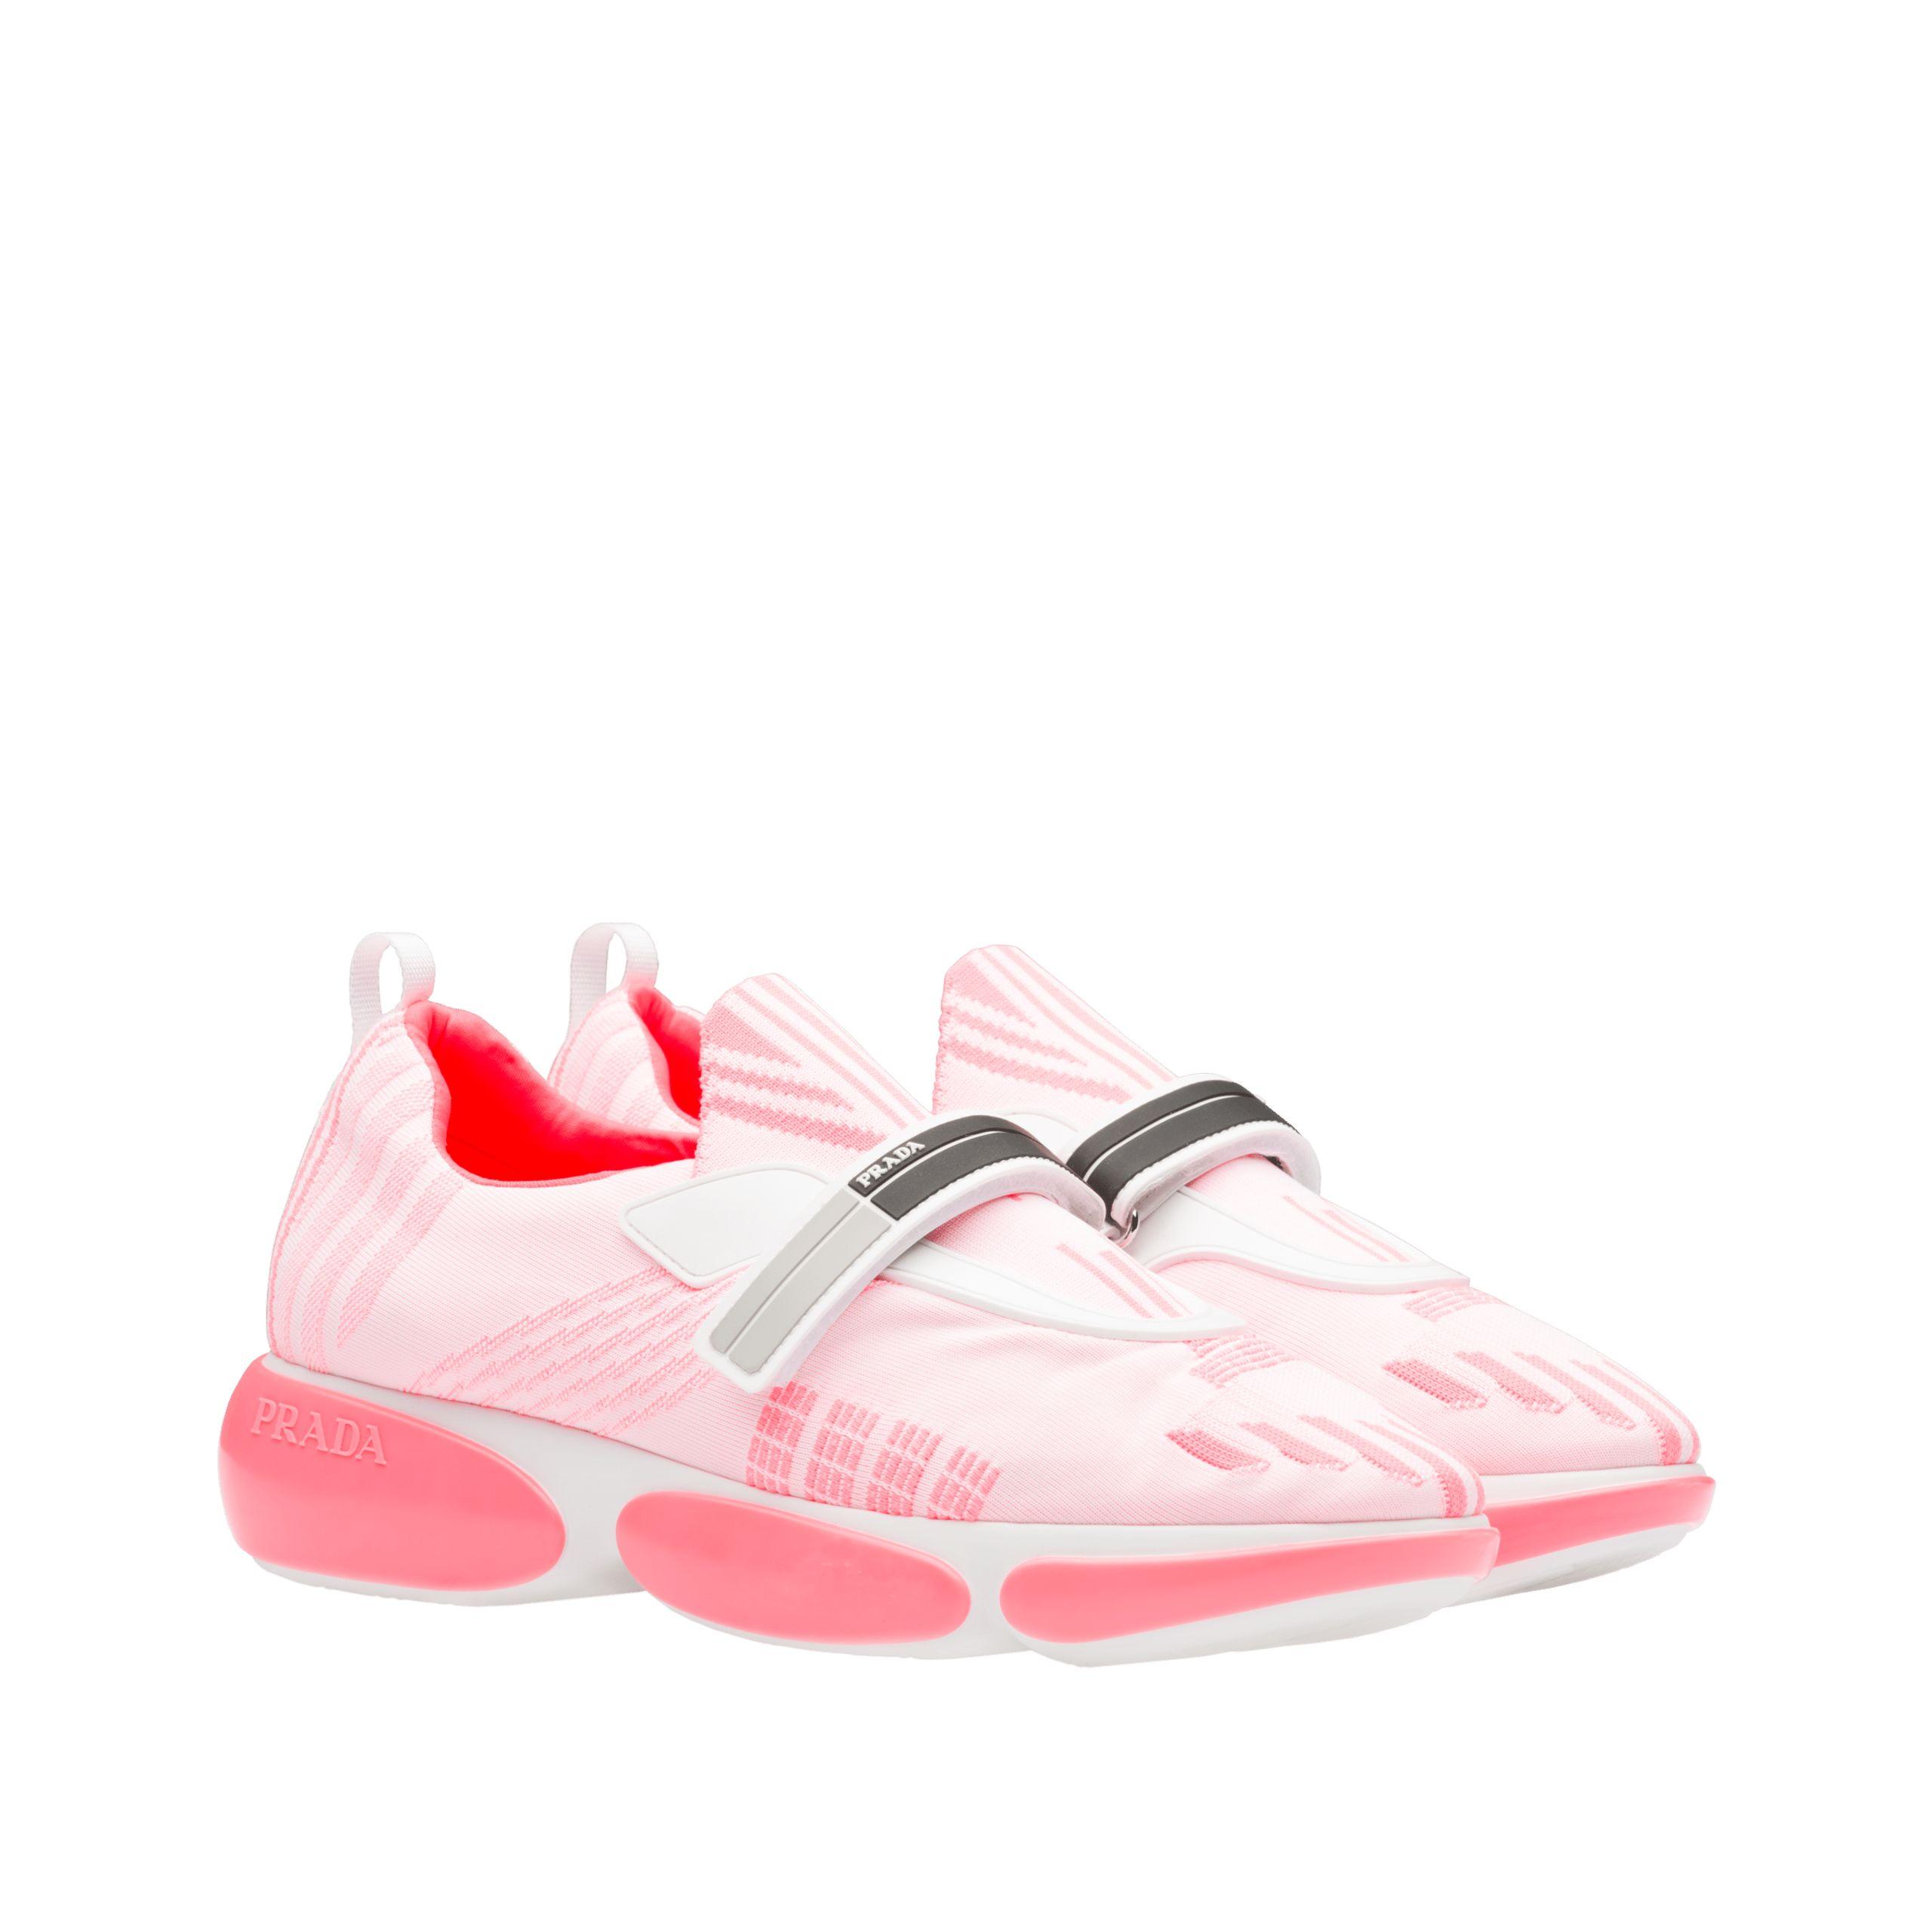 Prada Rubber Cloudbust Sneakers in Pink 